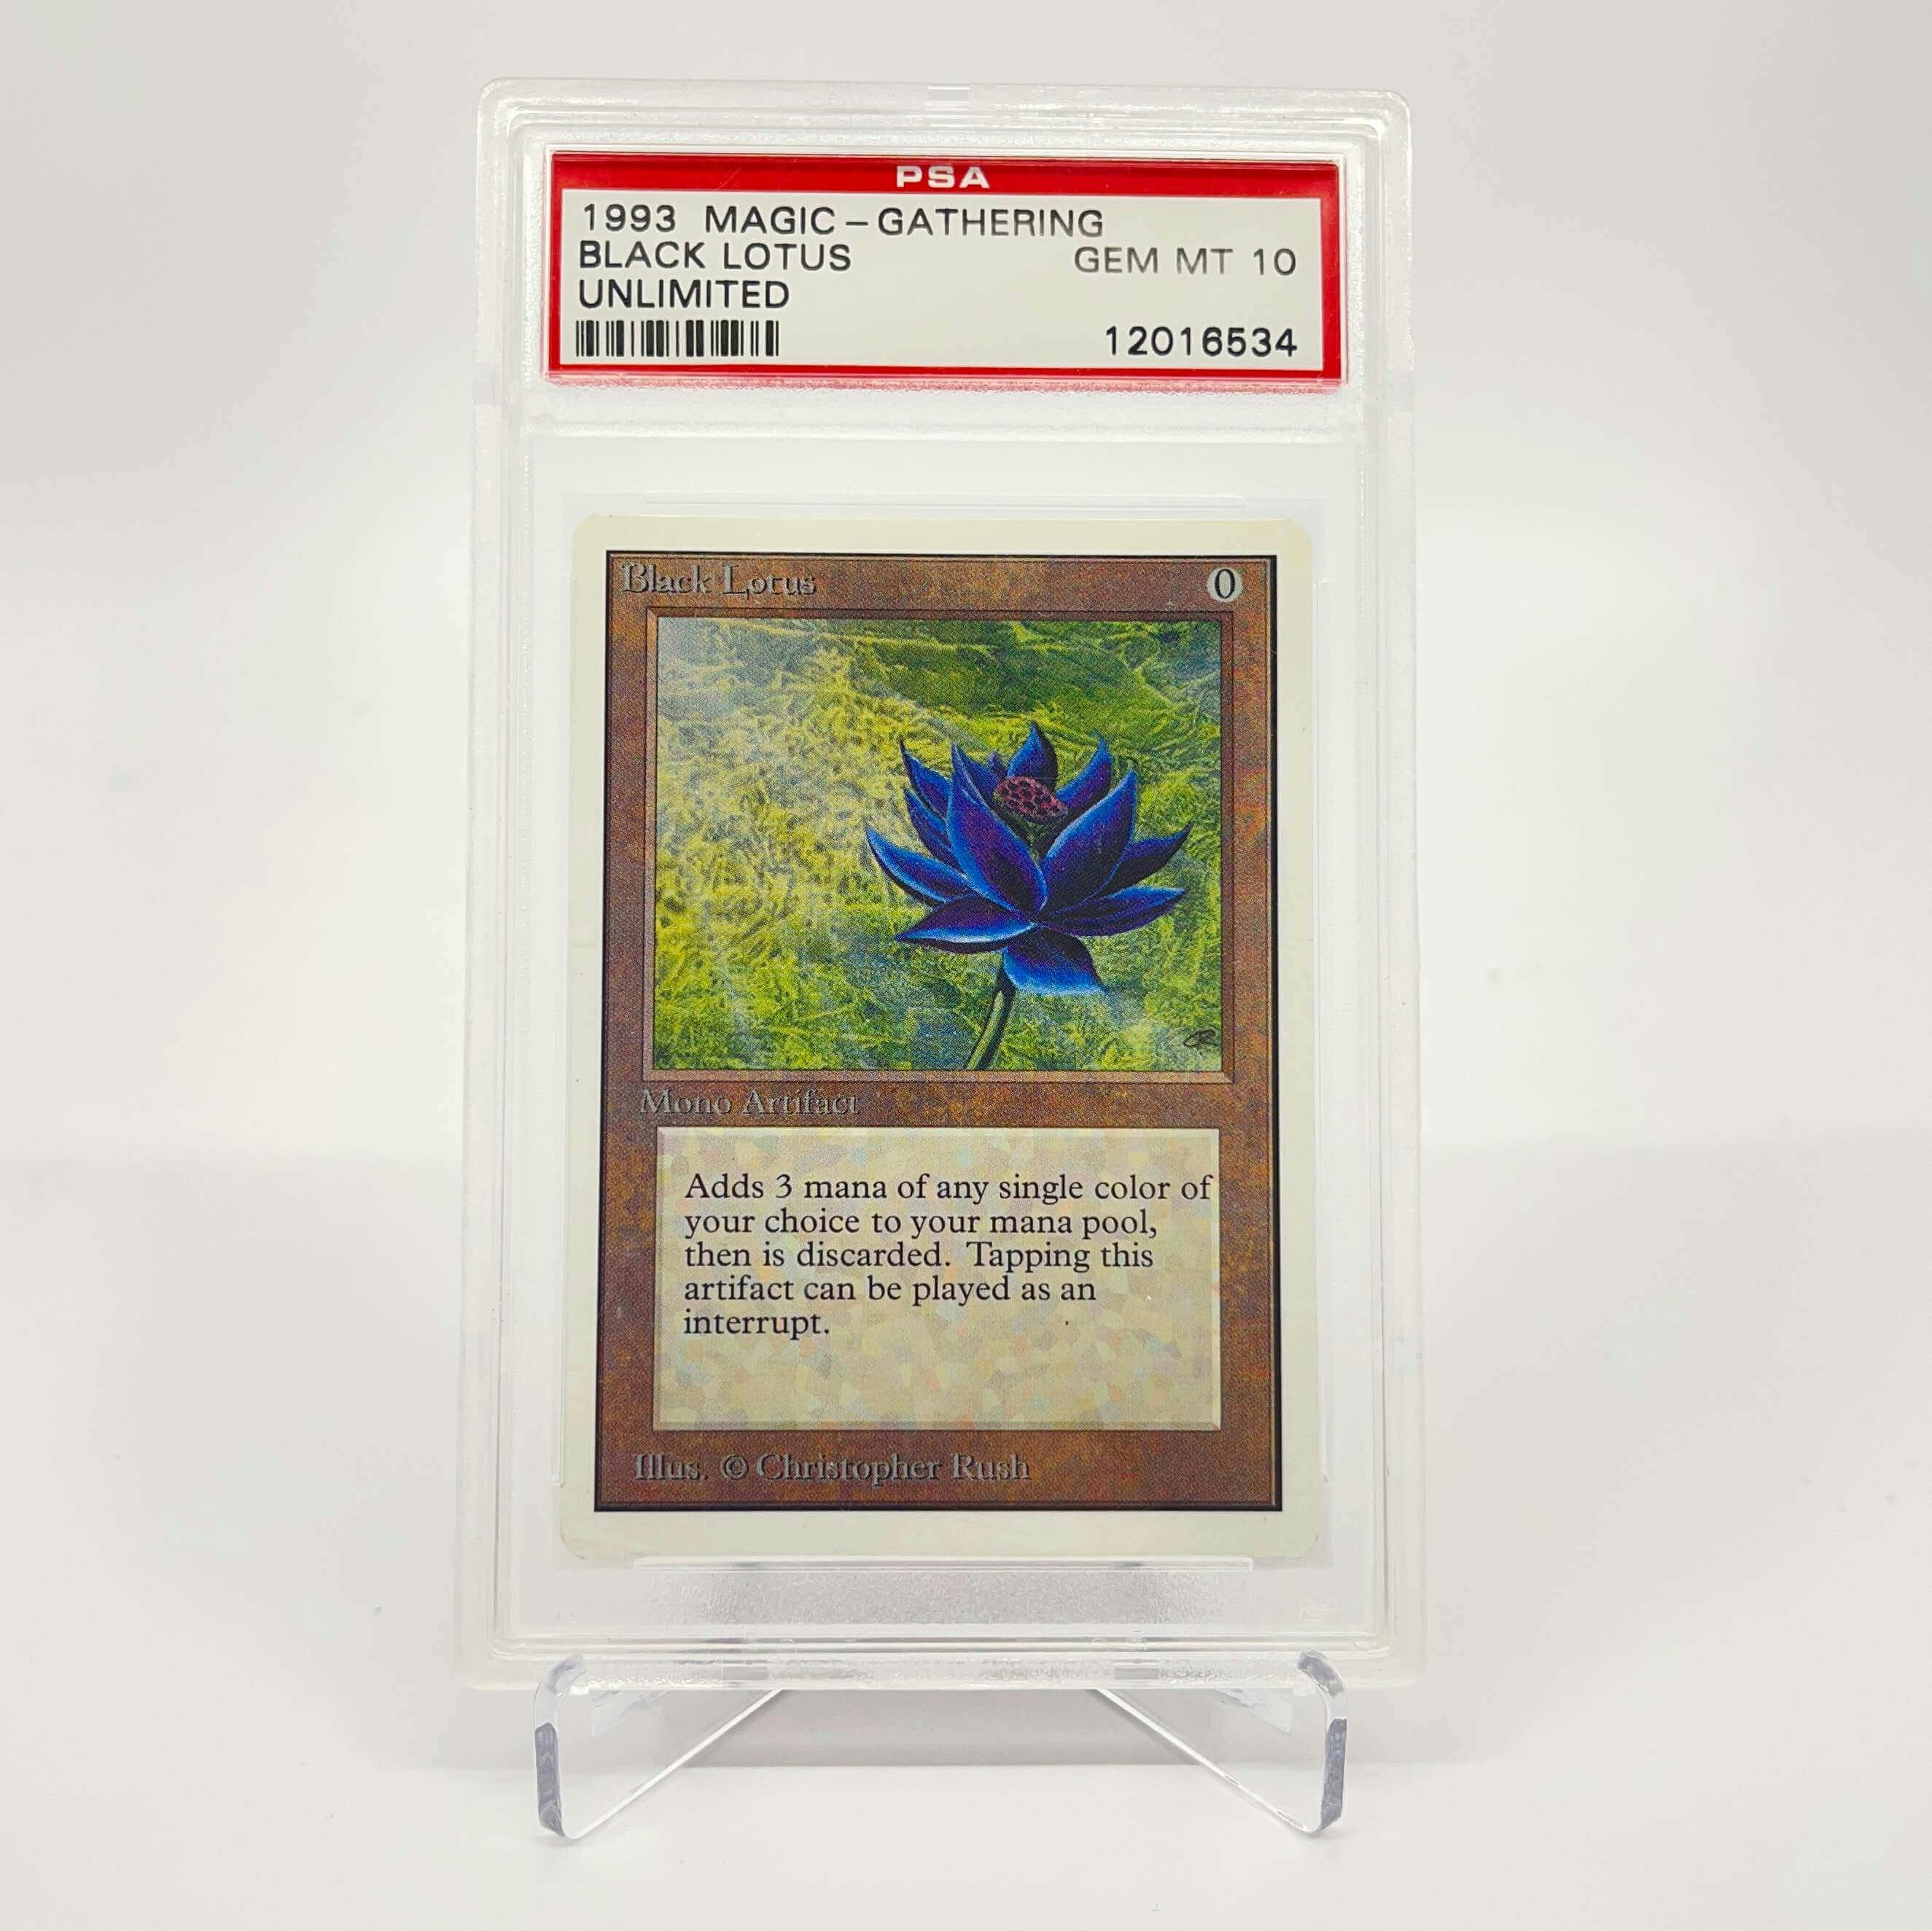 Magic: The Gathering PSA 10 Unlimited Gem Mint Black Lotus 